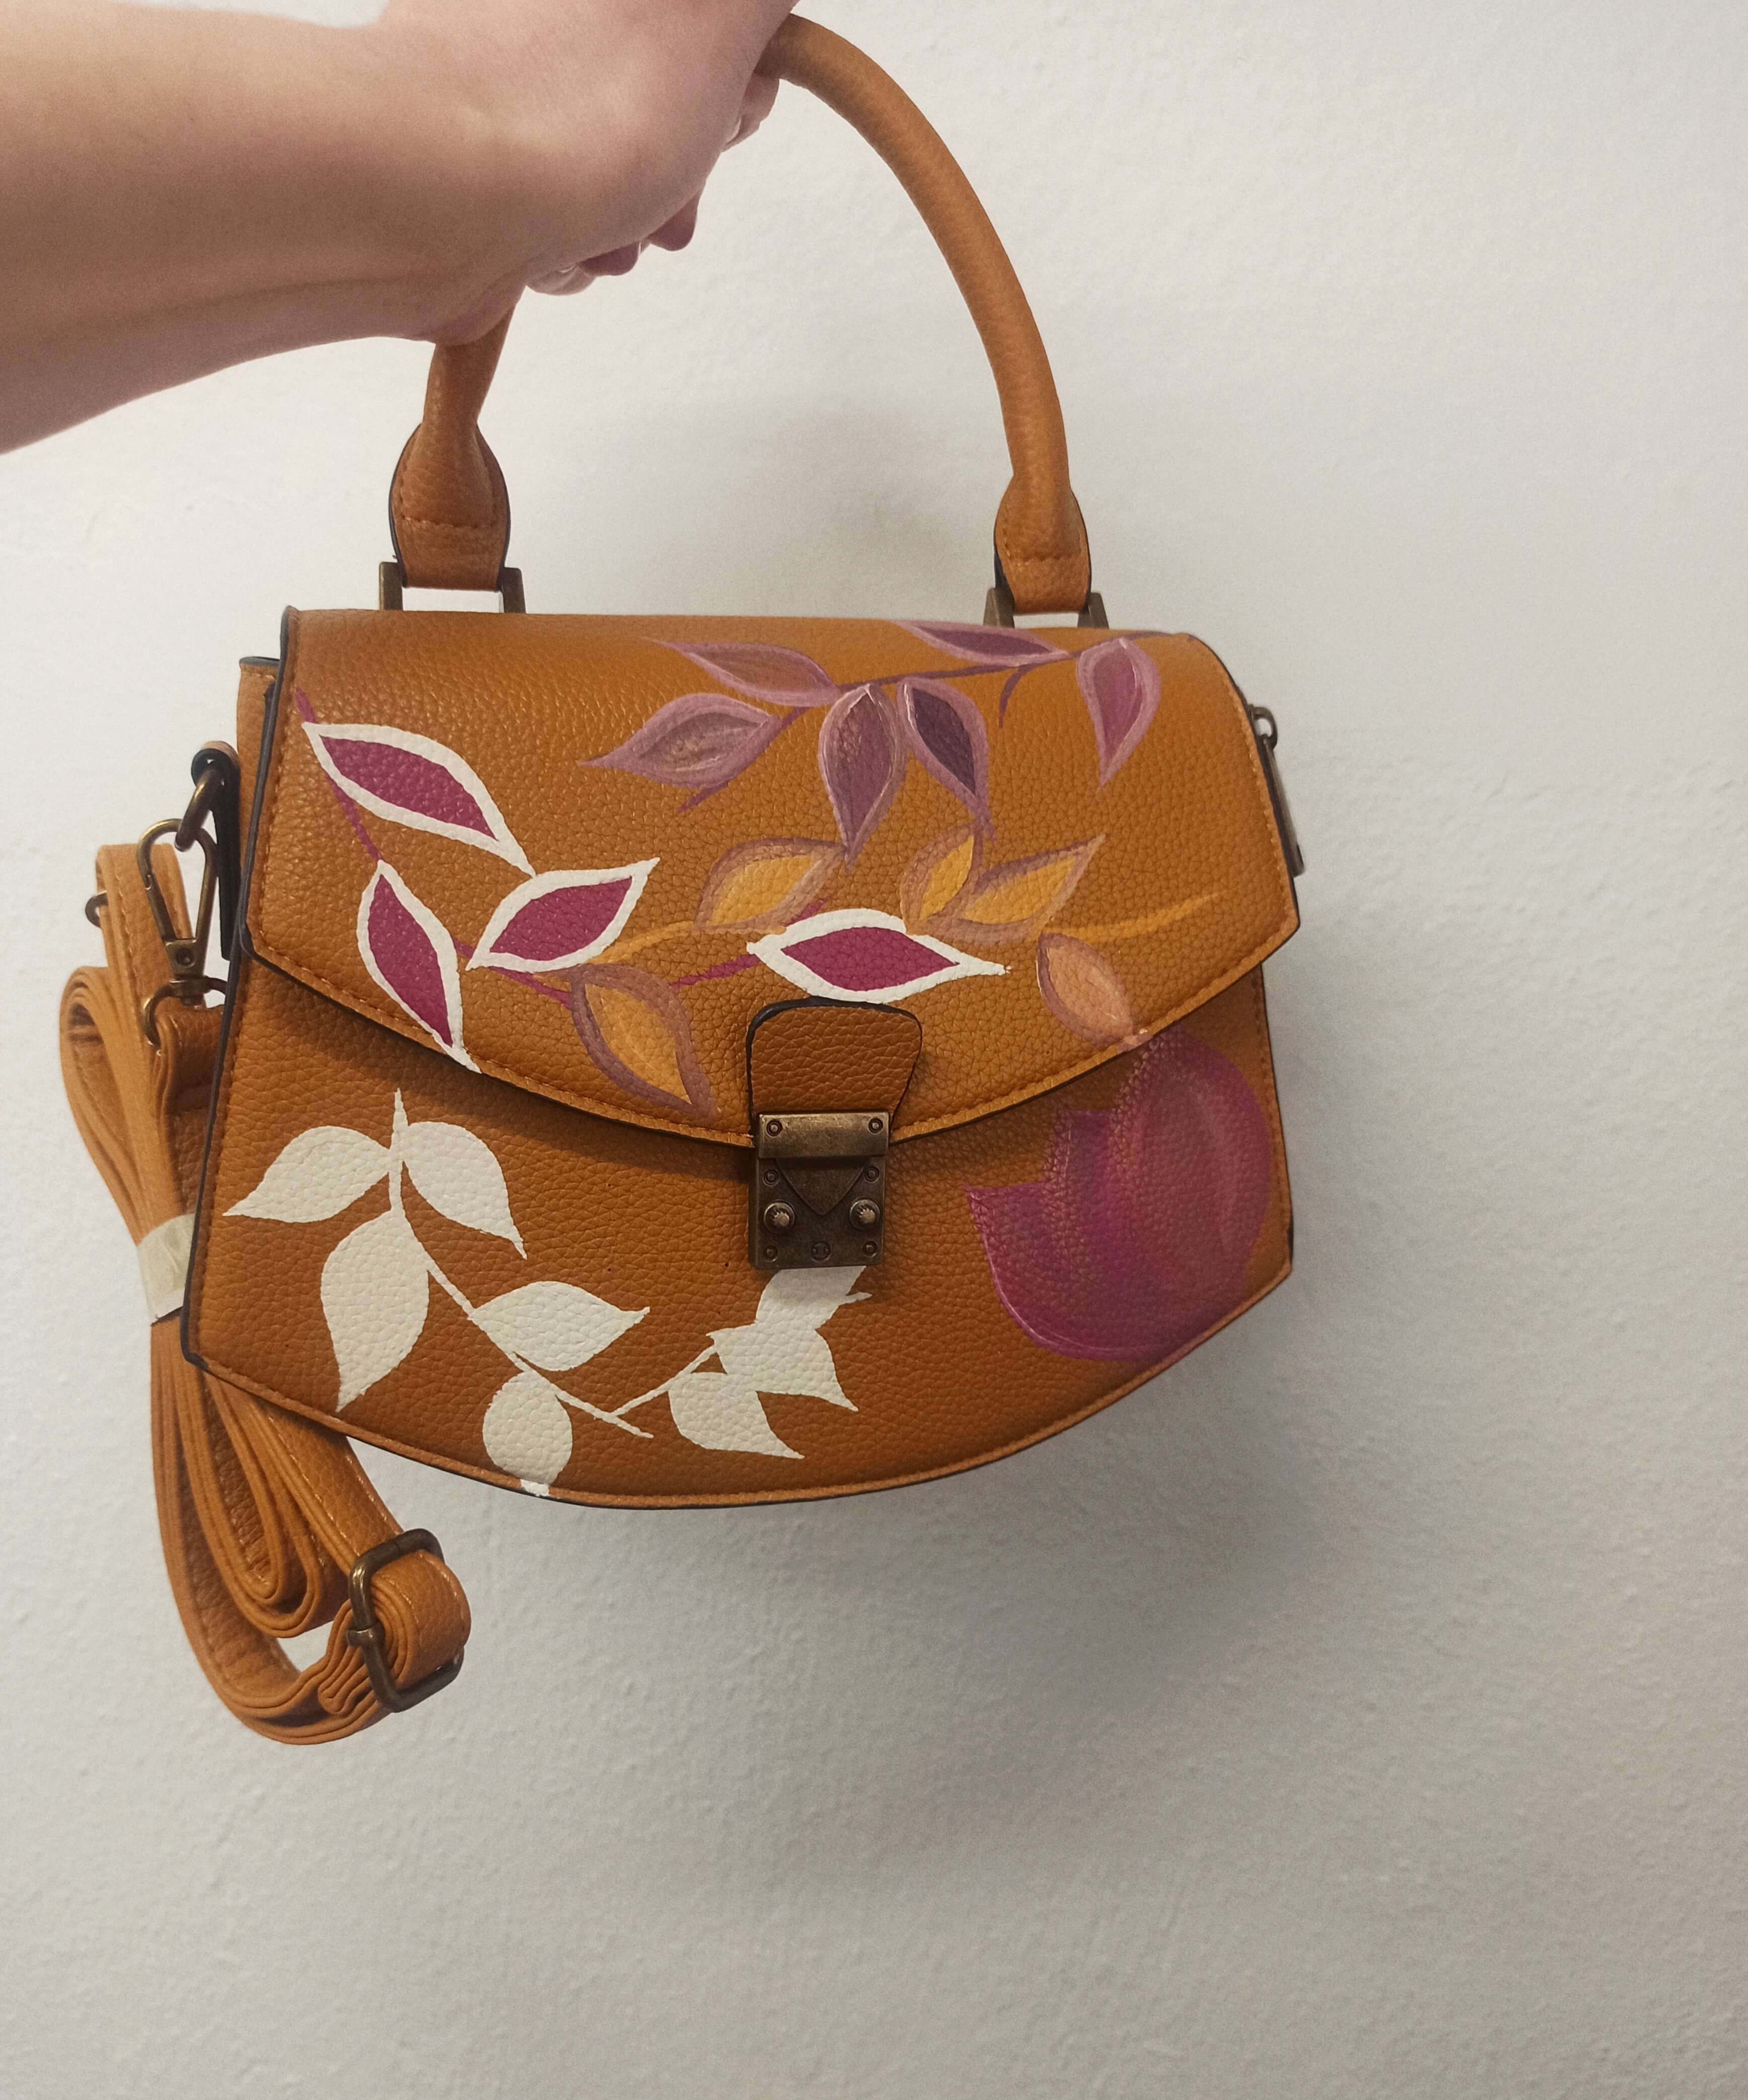 Emma hand-painted Bag